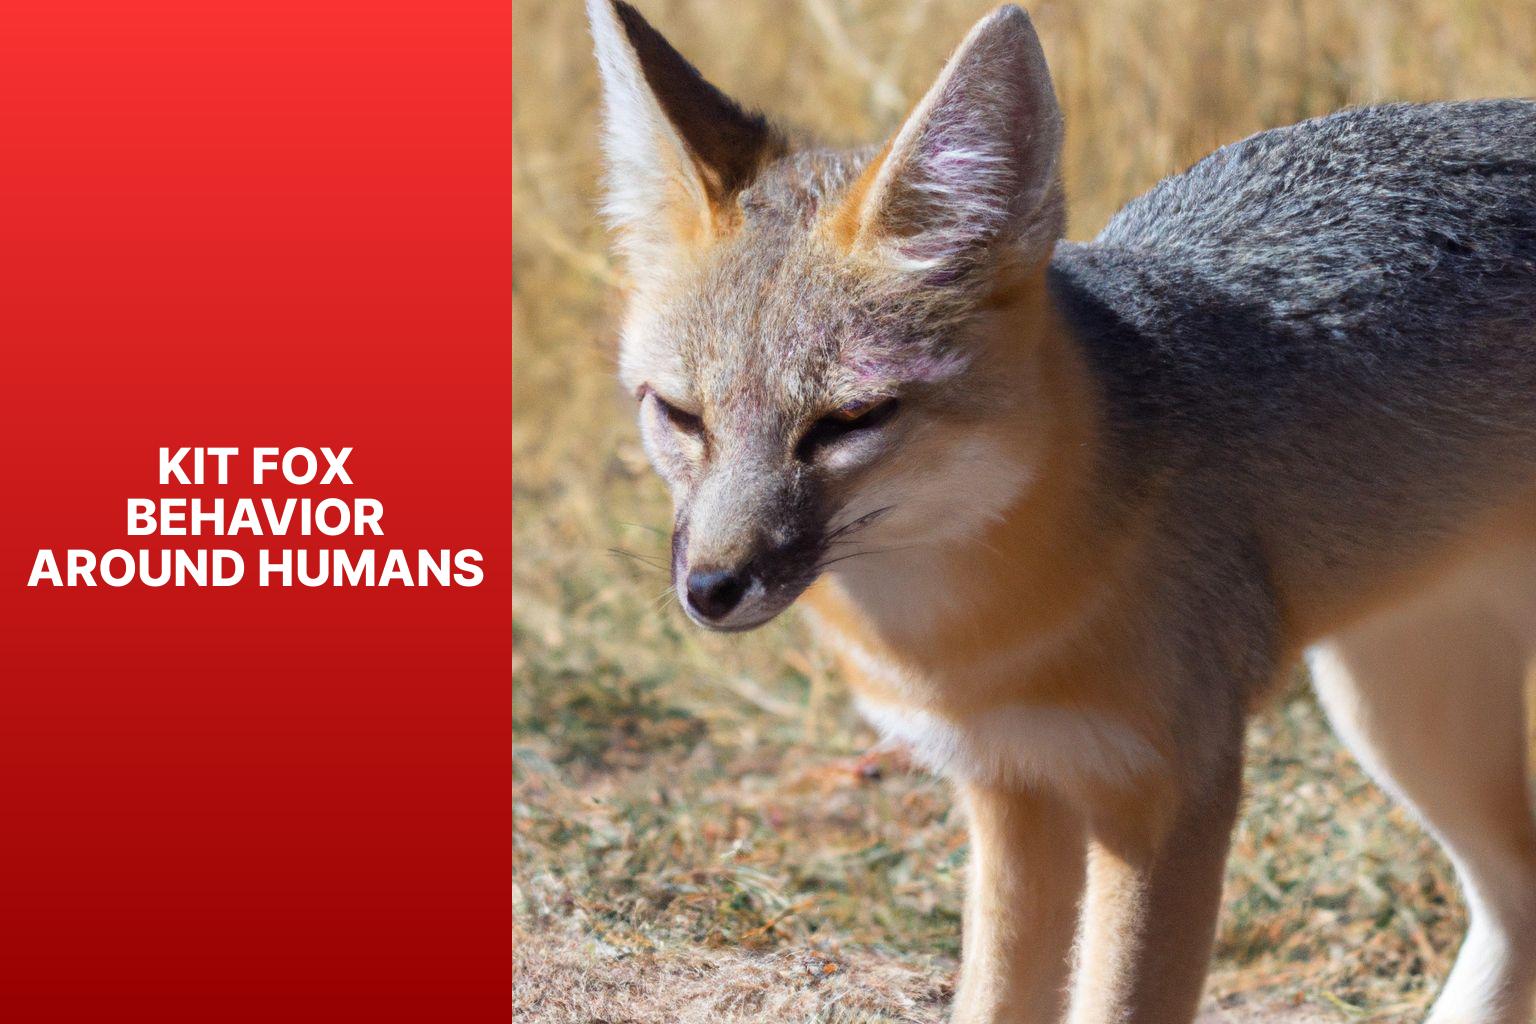 Kit Fox Behavior around Humans - Kit Fox and Human Interaction 